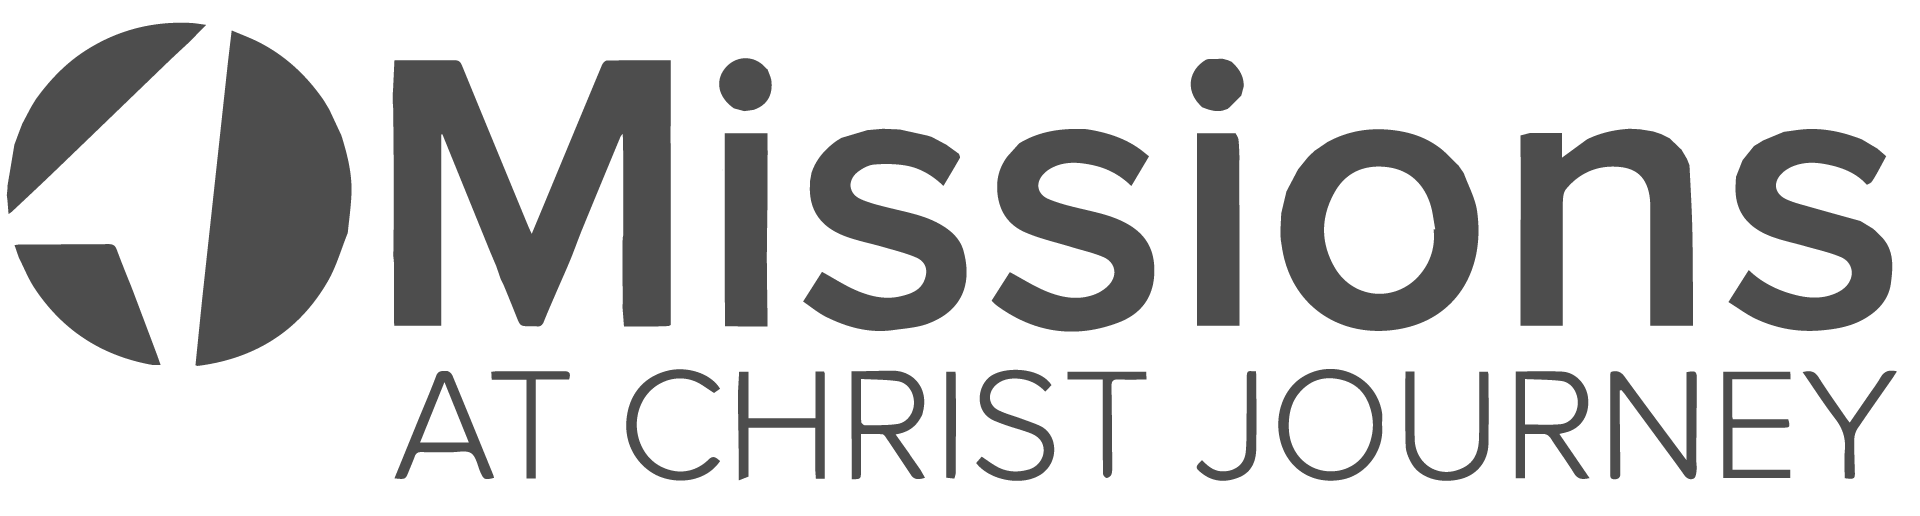 Christ-Journey-Church-MIssions logo gray